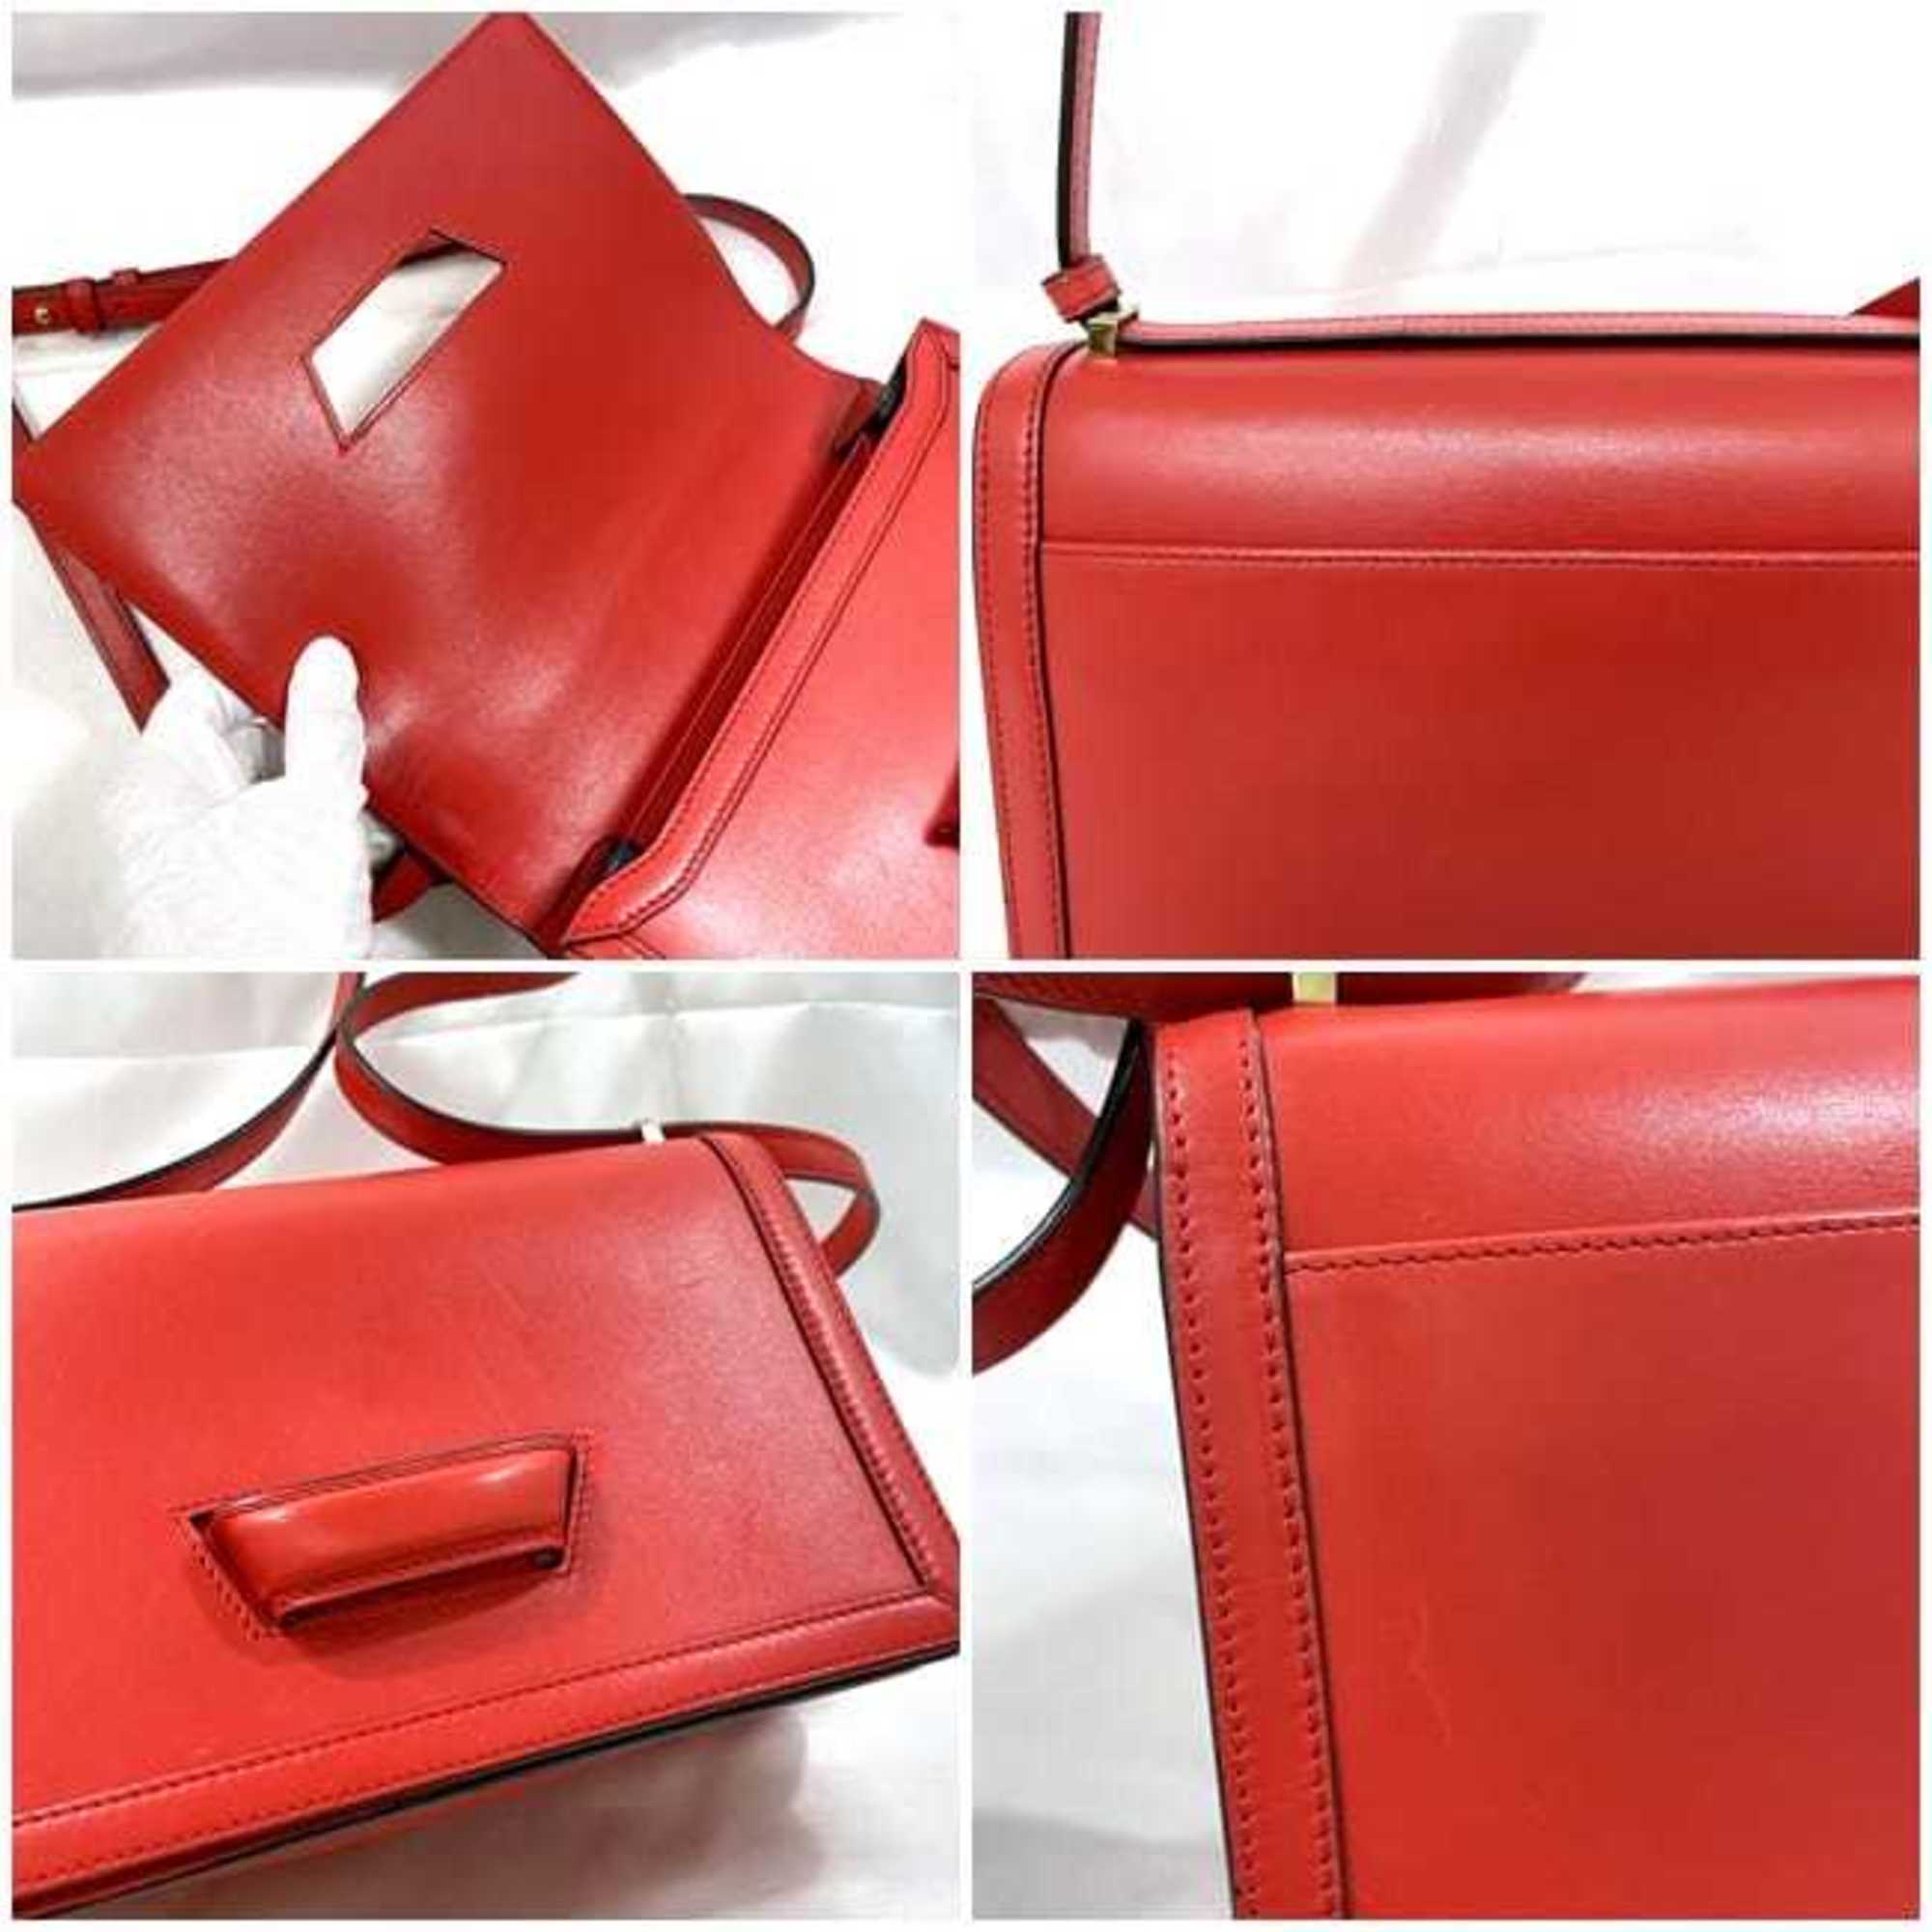 LOEWE Shoulder Bag Barcelona Red f-19948 Flap Leather Women's Compact